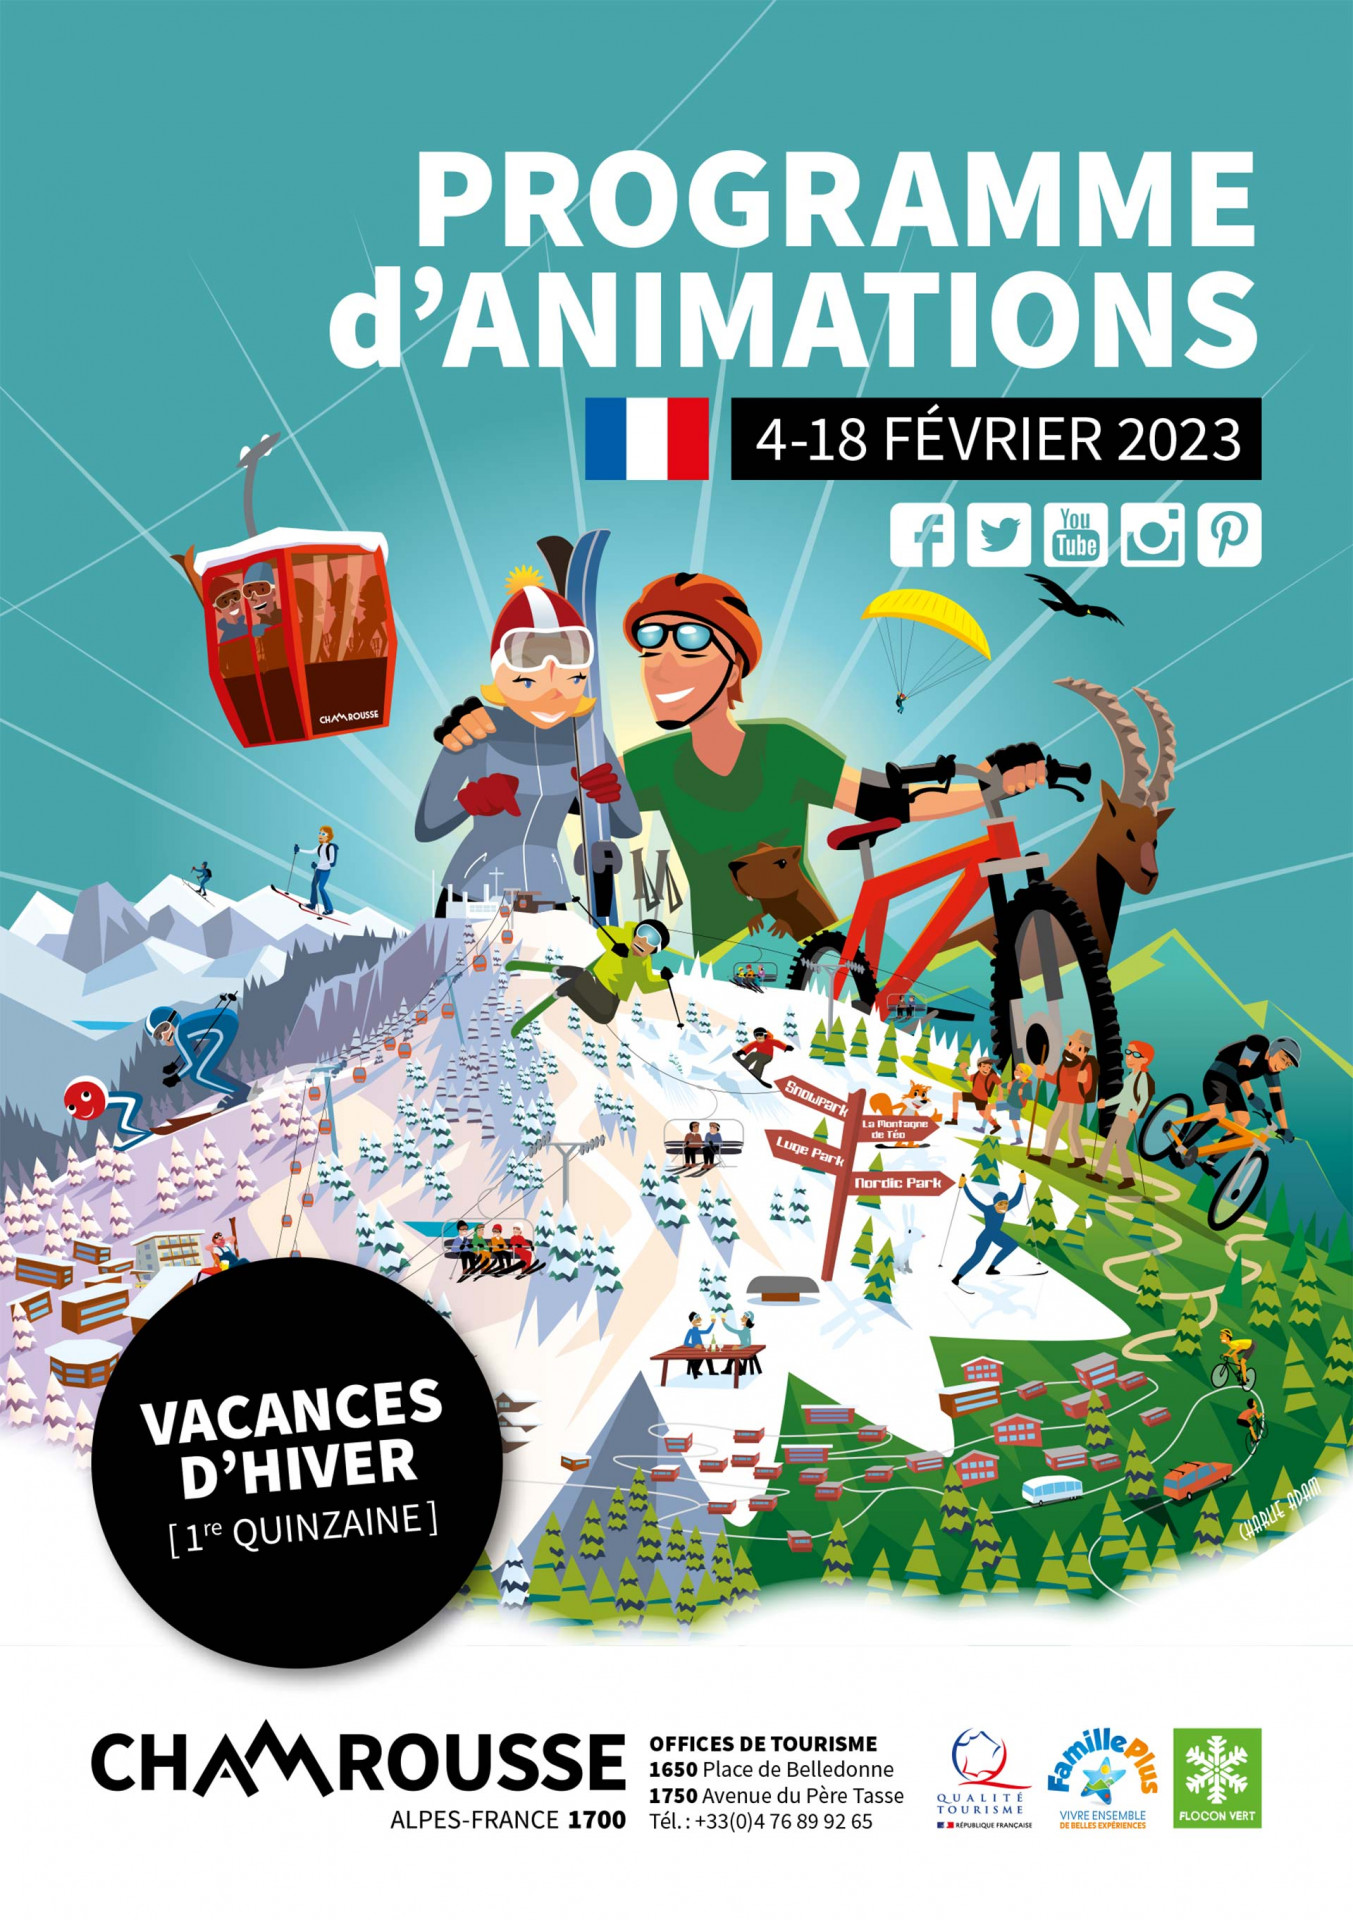 Chamrousse programme animation événement hiver février 2023 station ski montagne grenoble isère alpes france